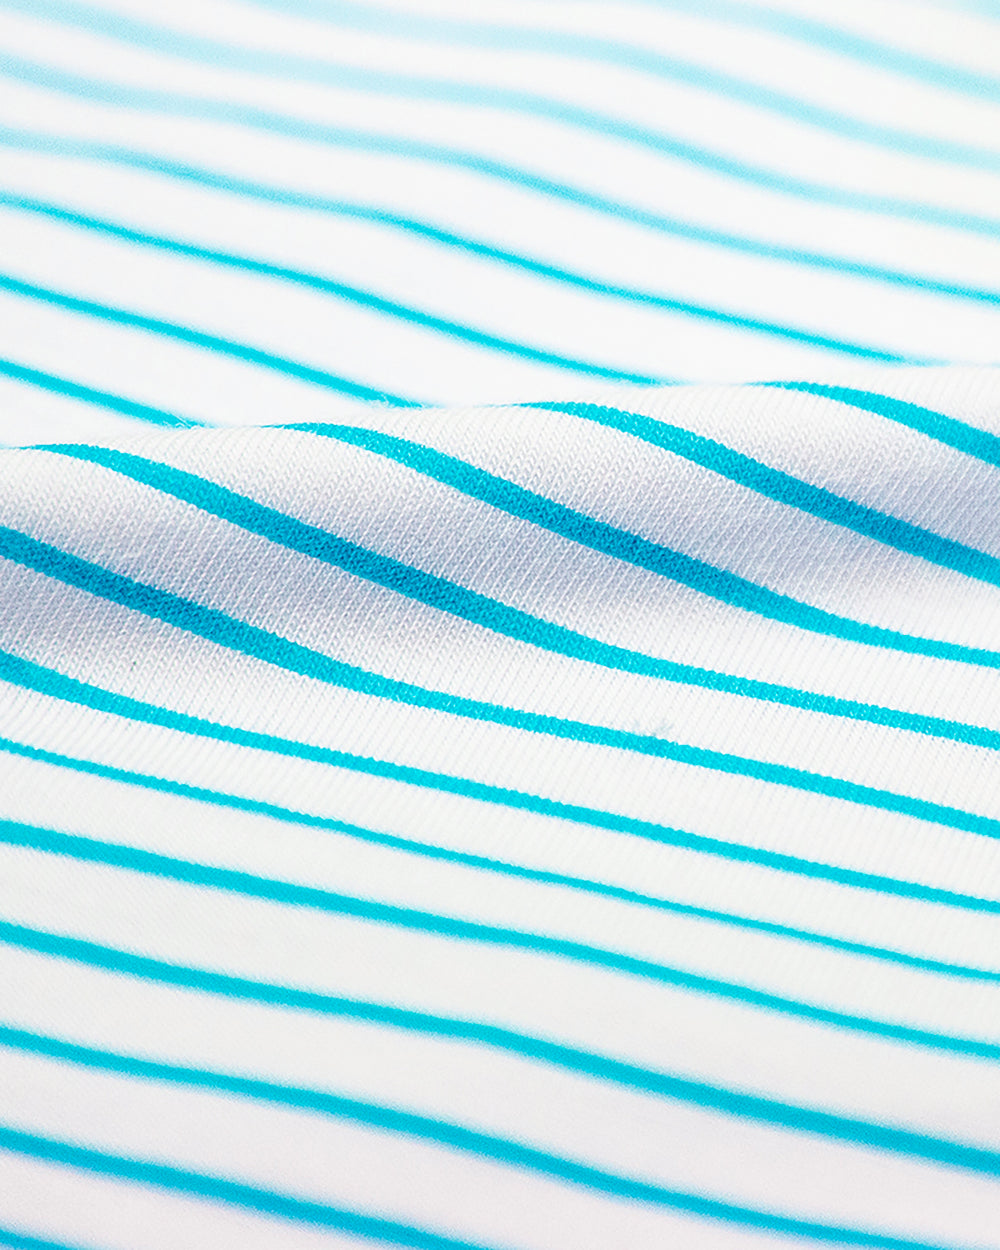 The Original Brief - Blue Candy Stripe Stripe & Stare